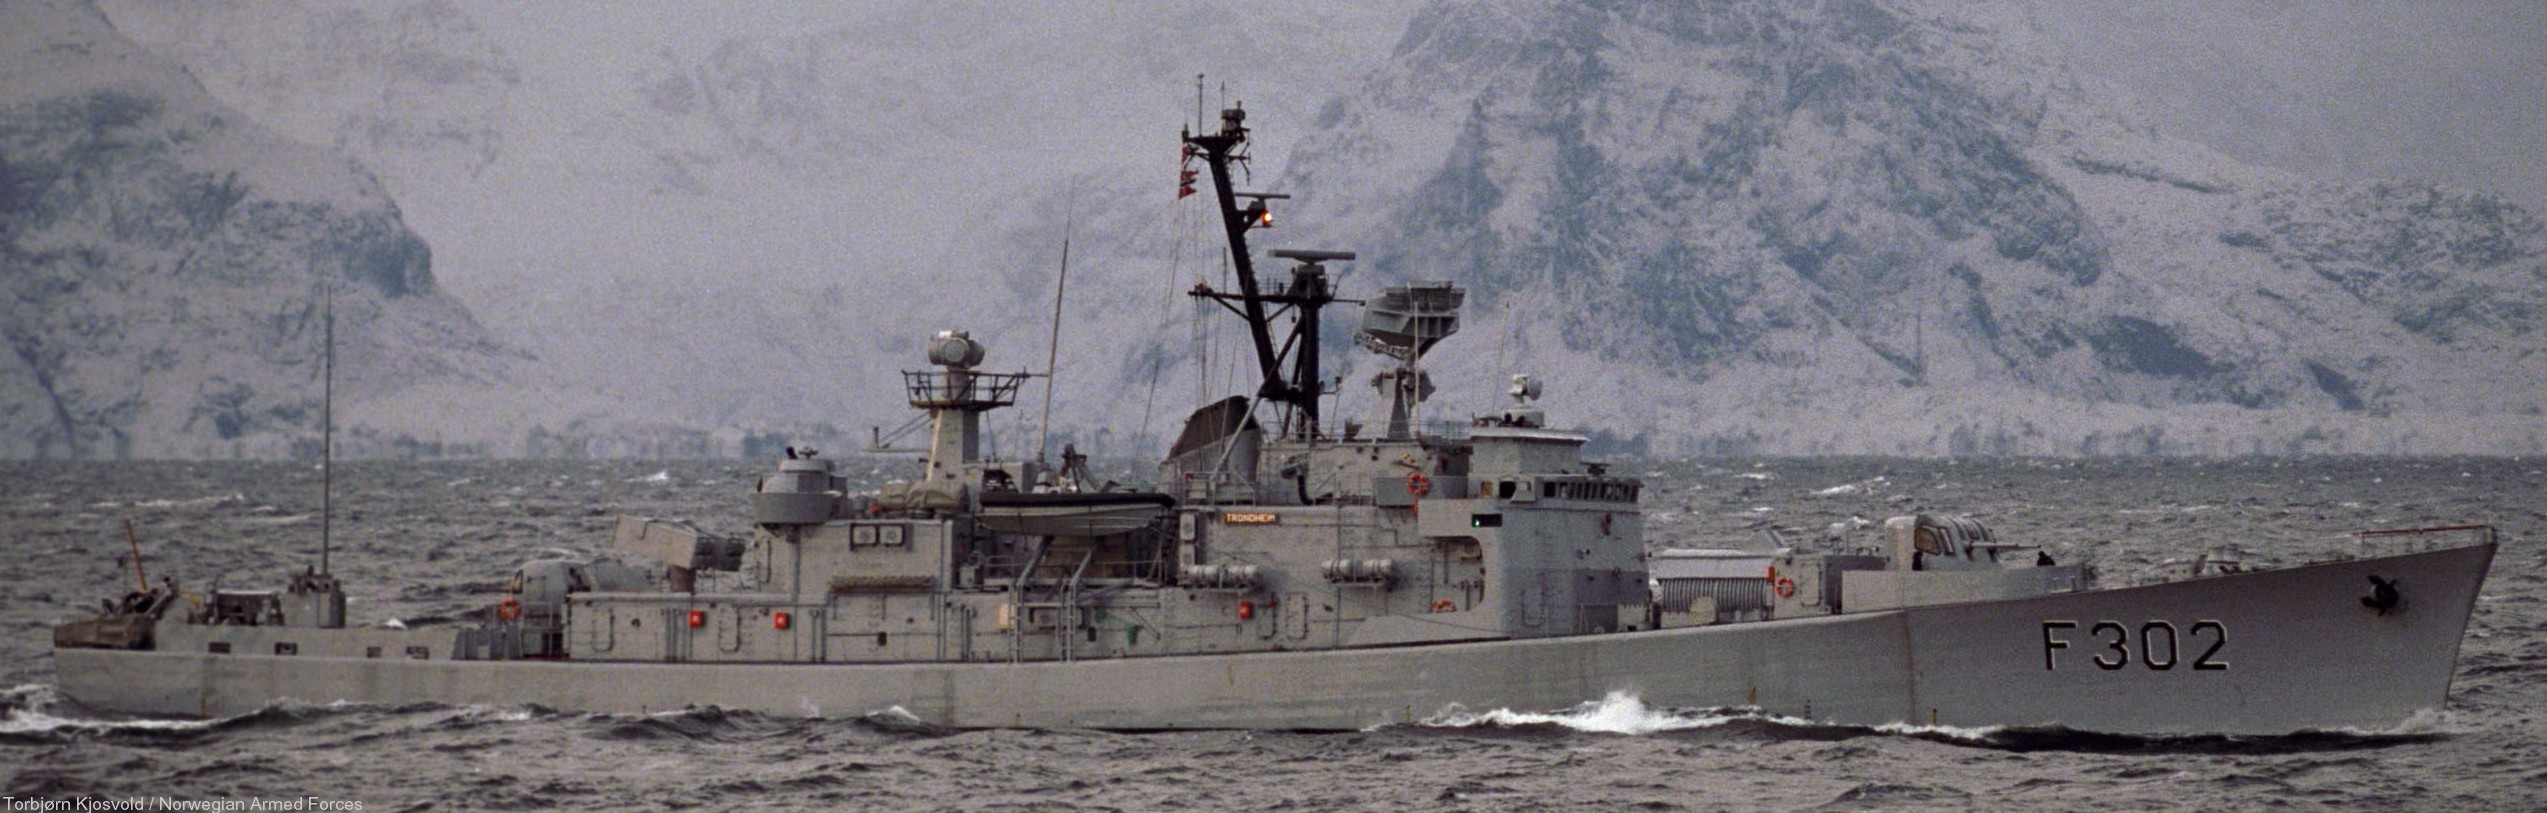 f-302 hnoms trondheim knm oslo class frigate royal norwegian navy sjoforsvaret 11